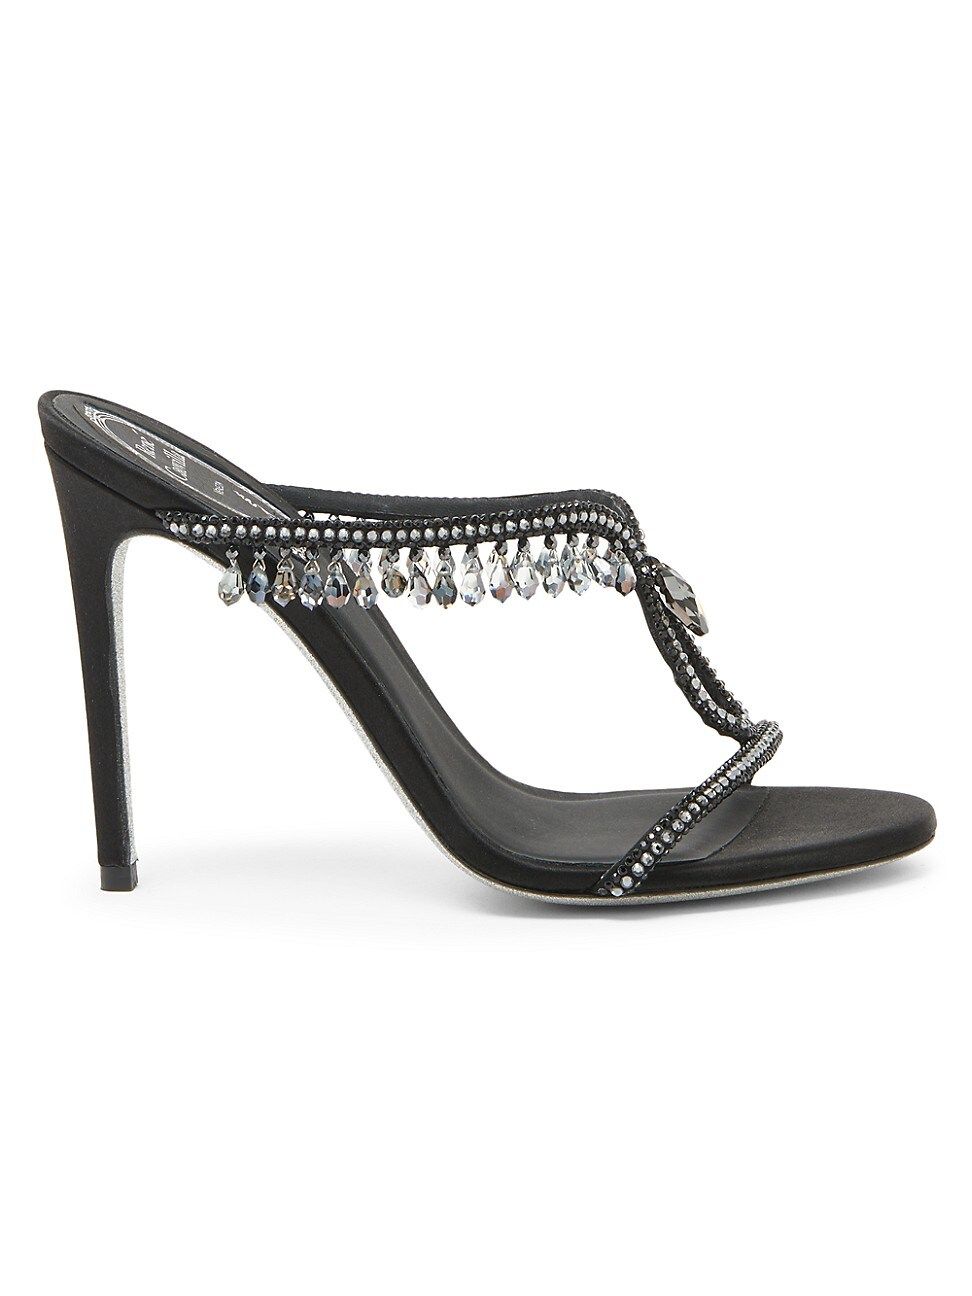 Rene Caovilla Chantal Embellished Satin Sandals | Saks Fifth Avenue